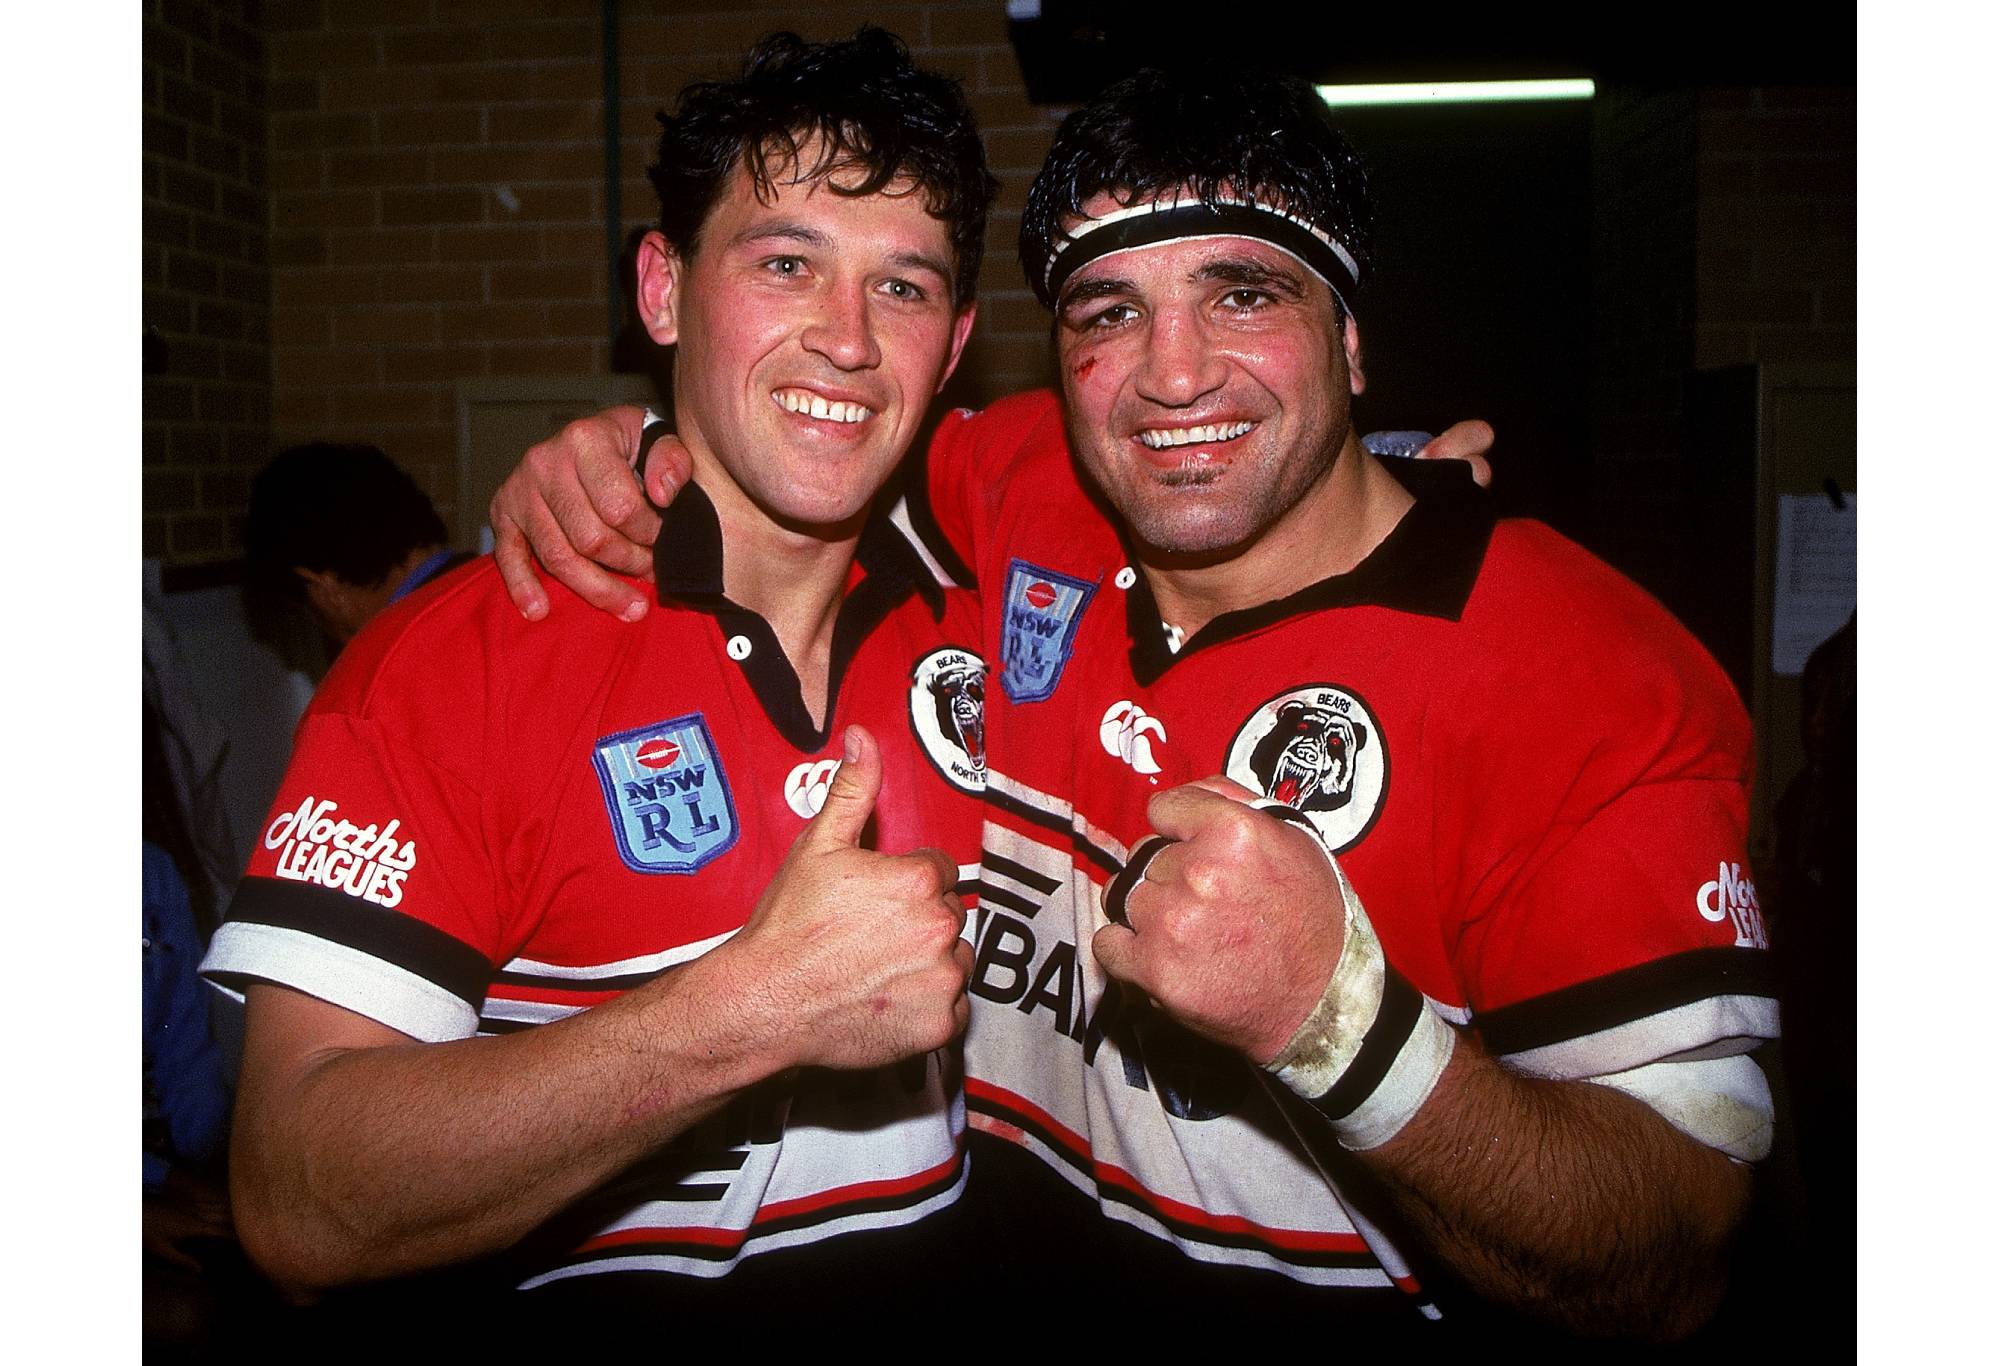 1993 NSWRL - North Sydney Bears